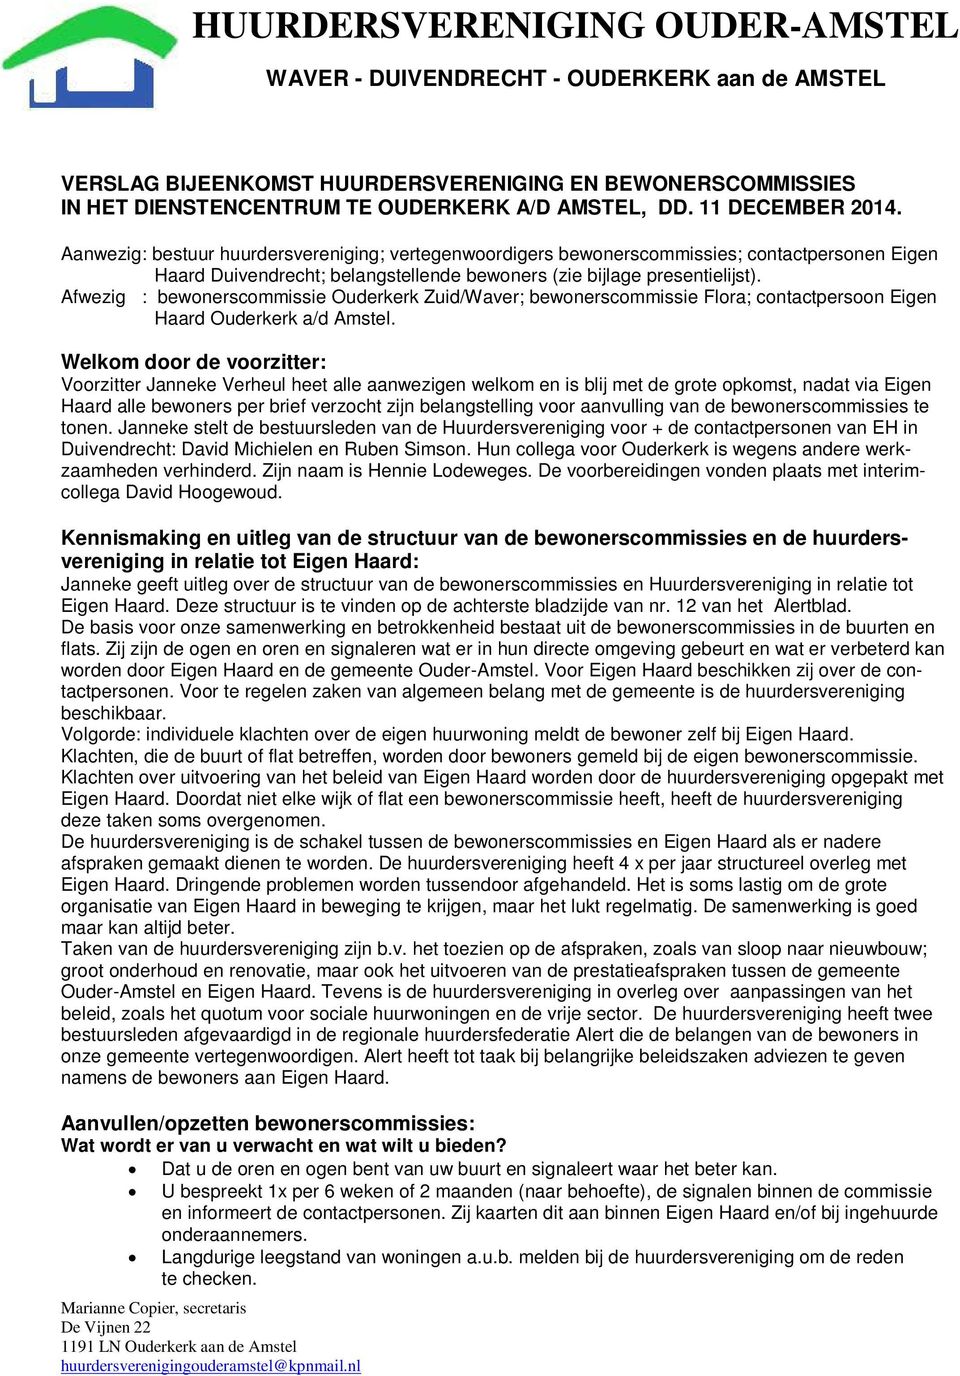 Afwezig : bewonerscommissie Ouderkerk Zuid/Waver; bewonerscommissie Flora; contactpersoon Eigen Haard Ouderkerk a/d Amstel.